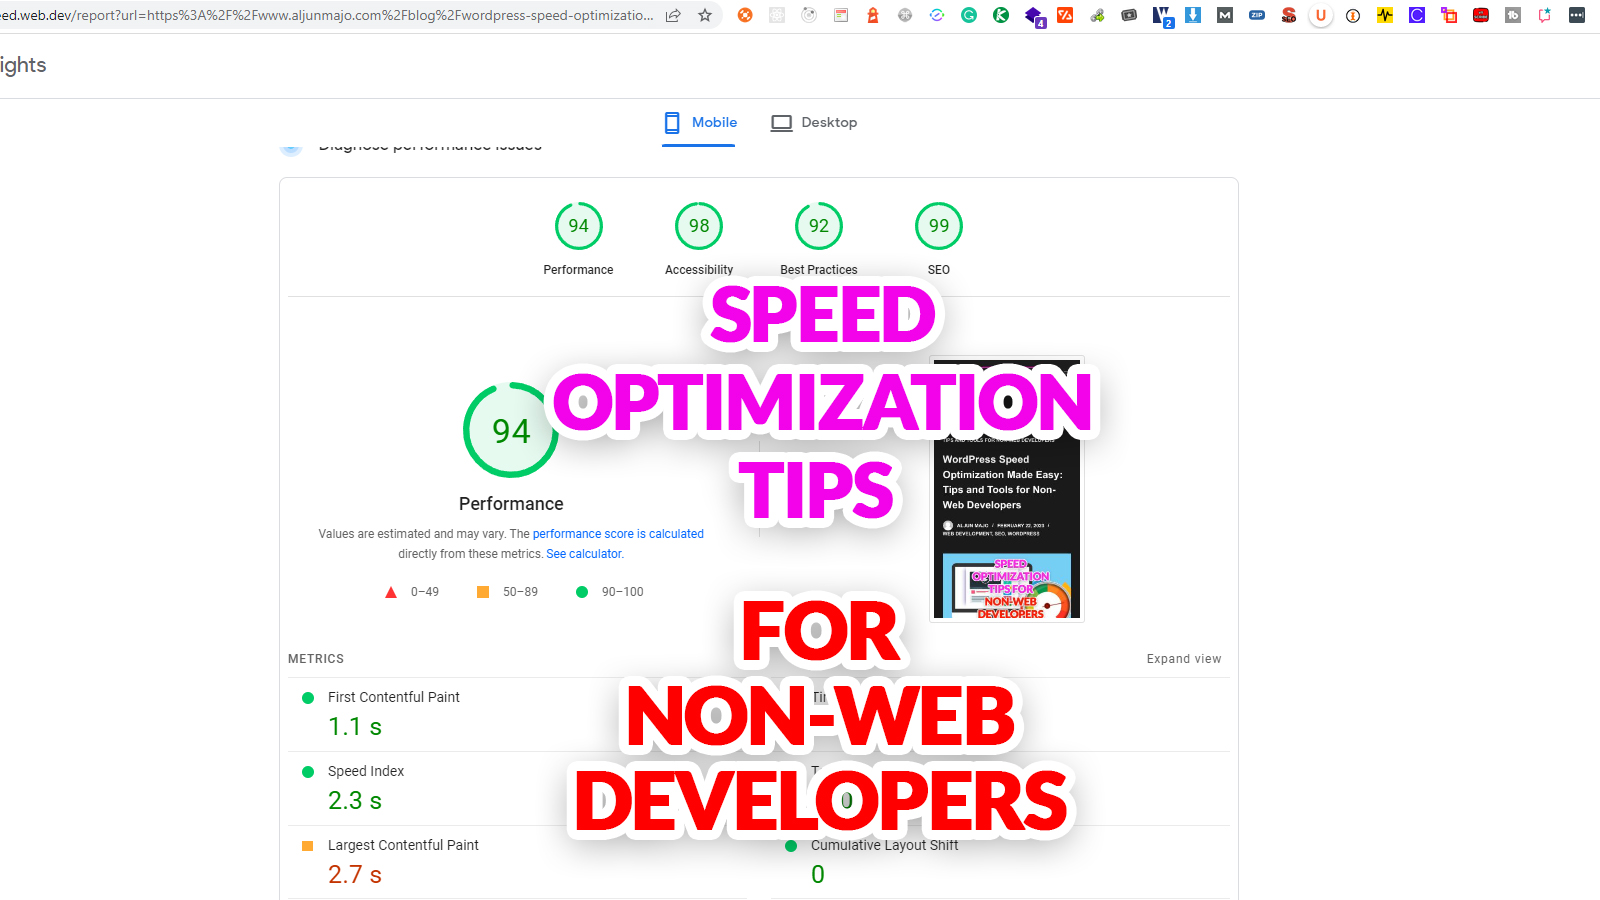 WordPress Speed Optimization Made Easy - PageSpeed Insights - Google Core Web Vitals